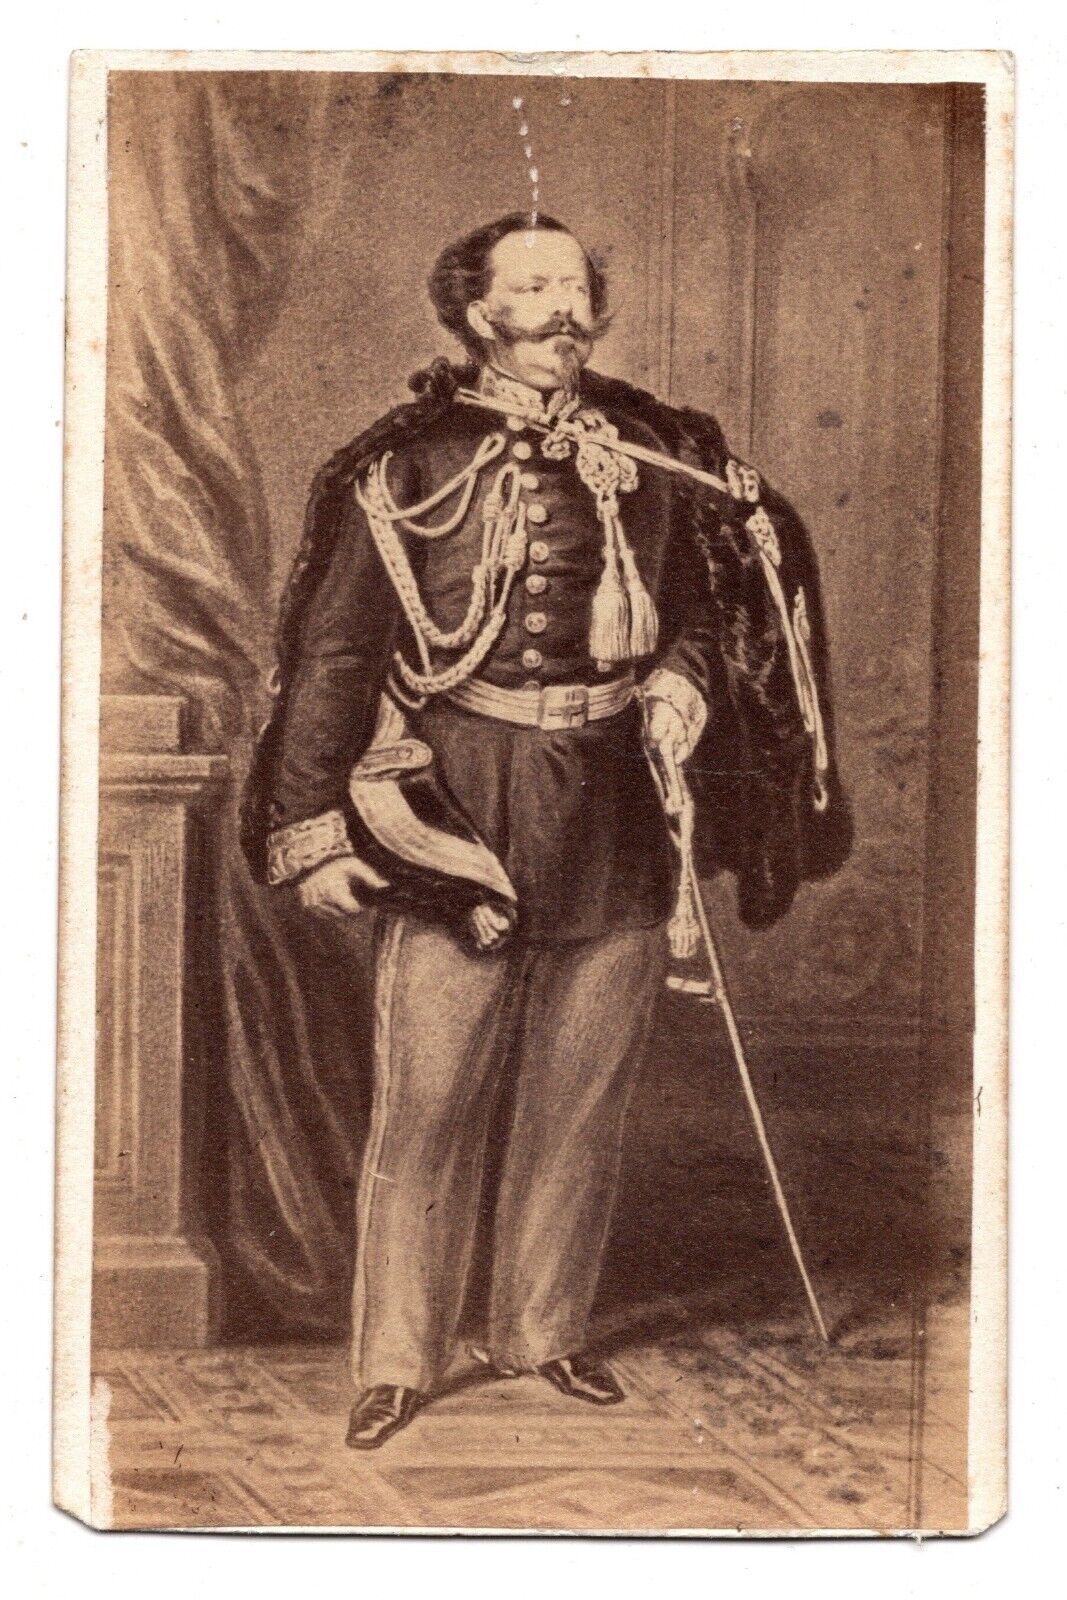 ANTIQUE CDV CIRCA 1870s VICTOR EMMANUEL II KING OF ITALY ALBUM PRINT DETAILED